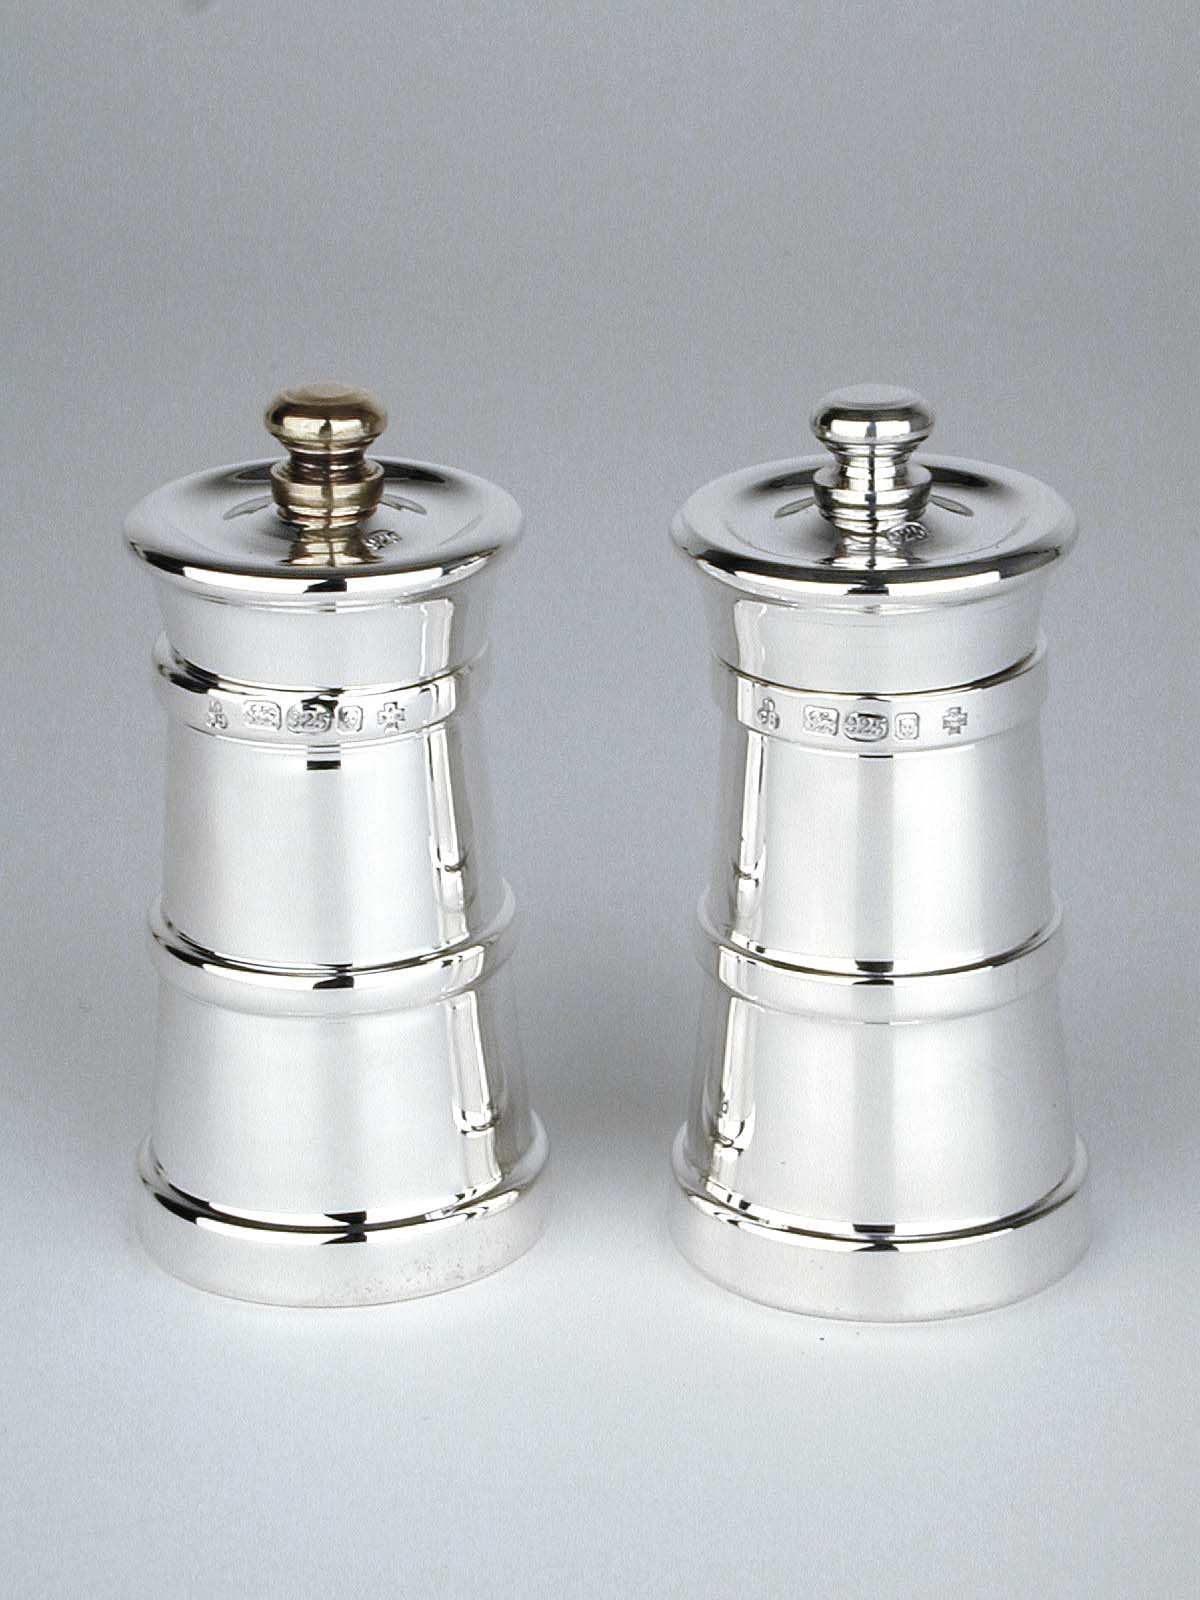 Silver churn salt & pepper grinders